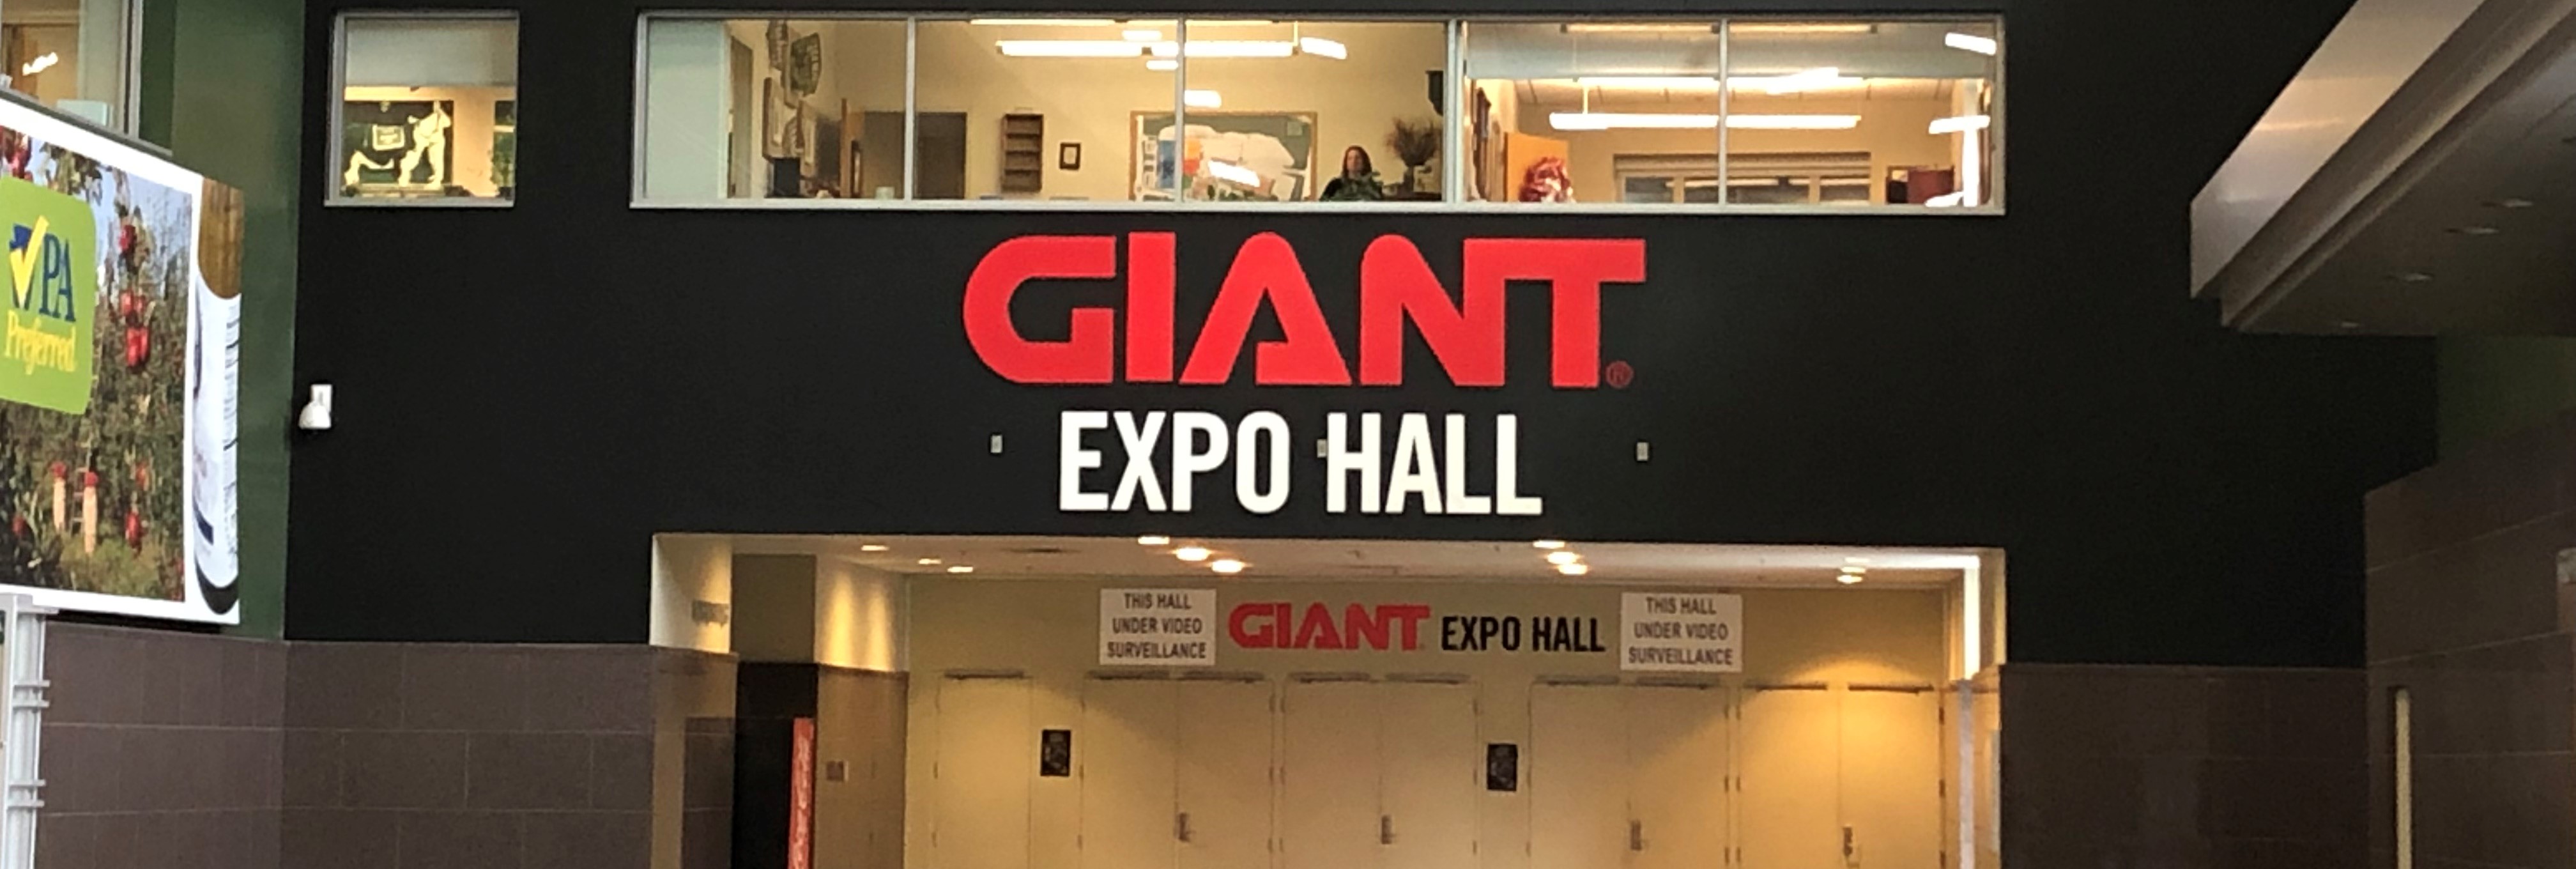 Giant Expo Hall